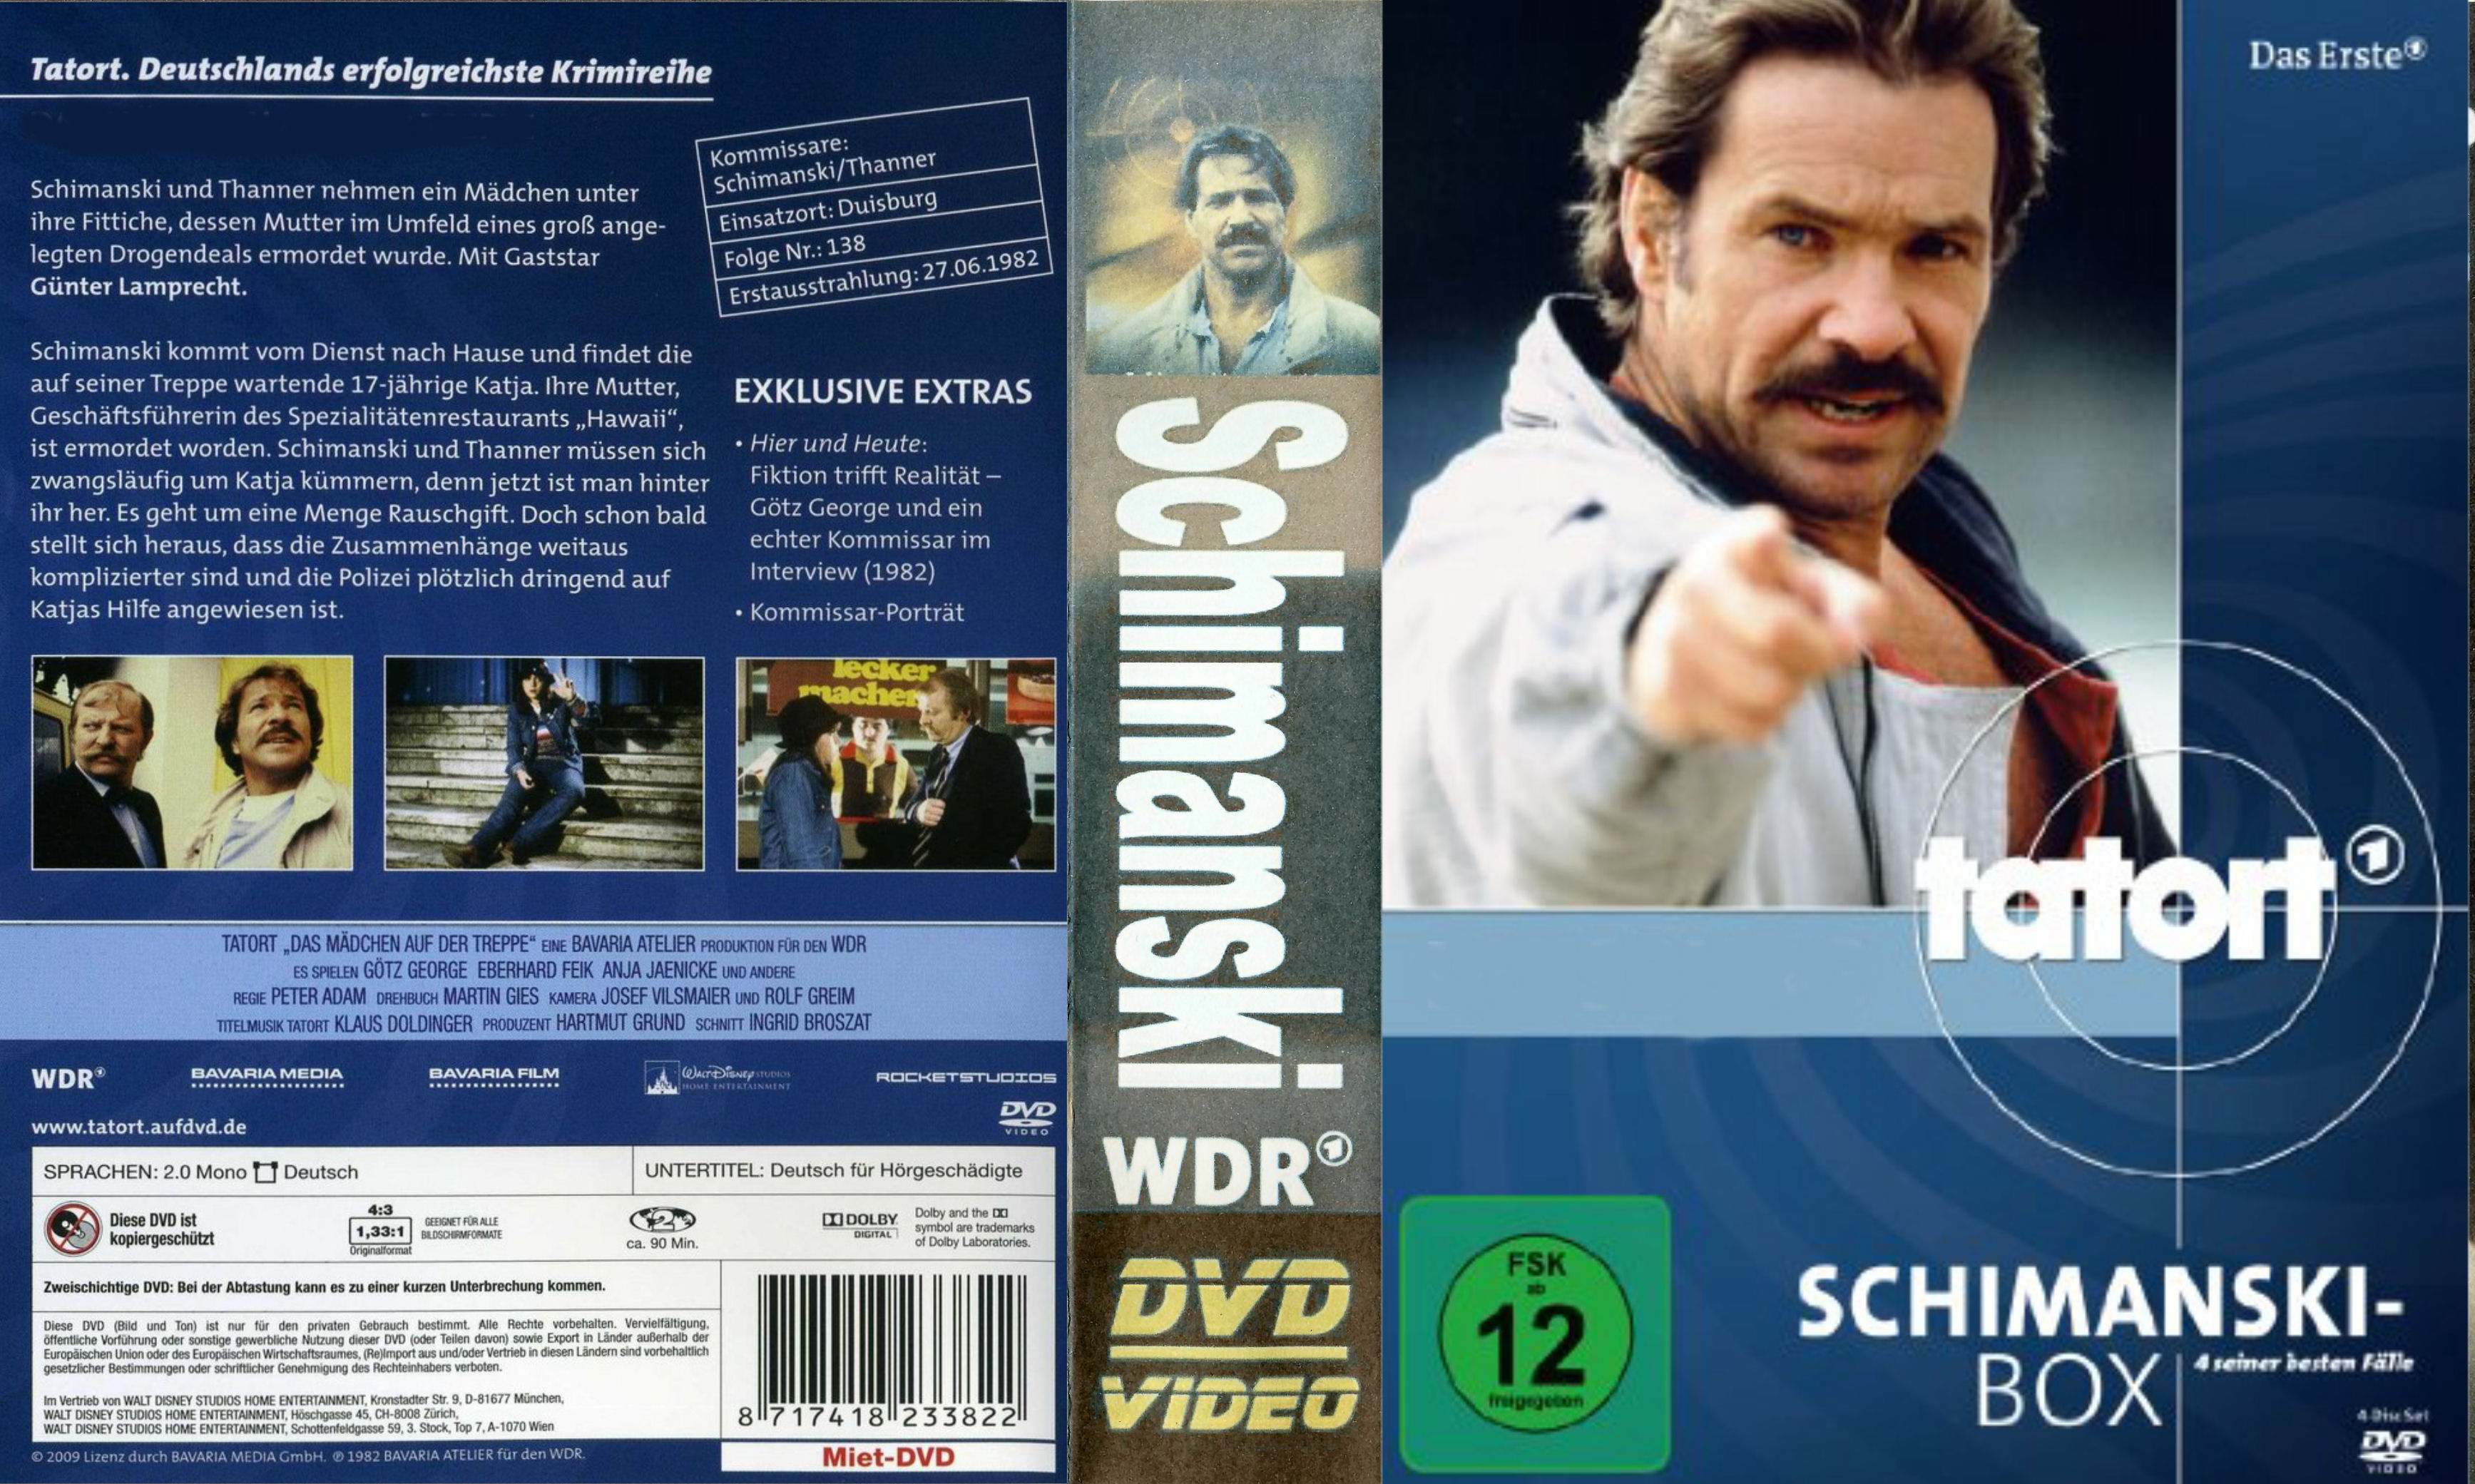 Schimanski Collectie Tatort No Subs -DvD 10